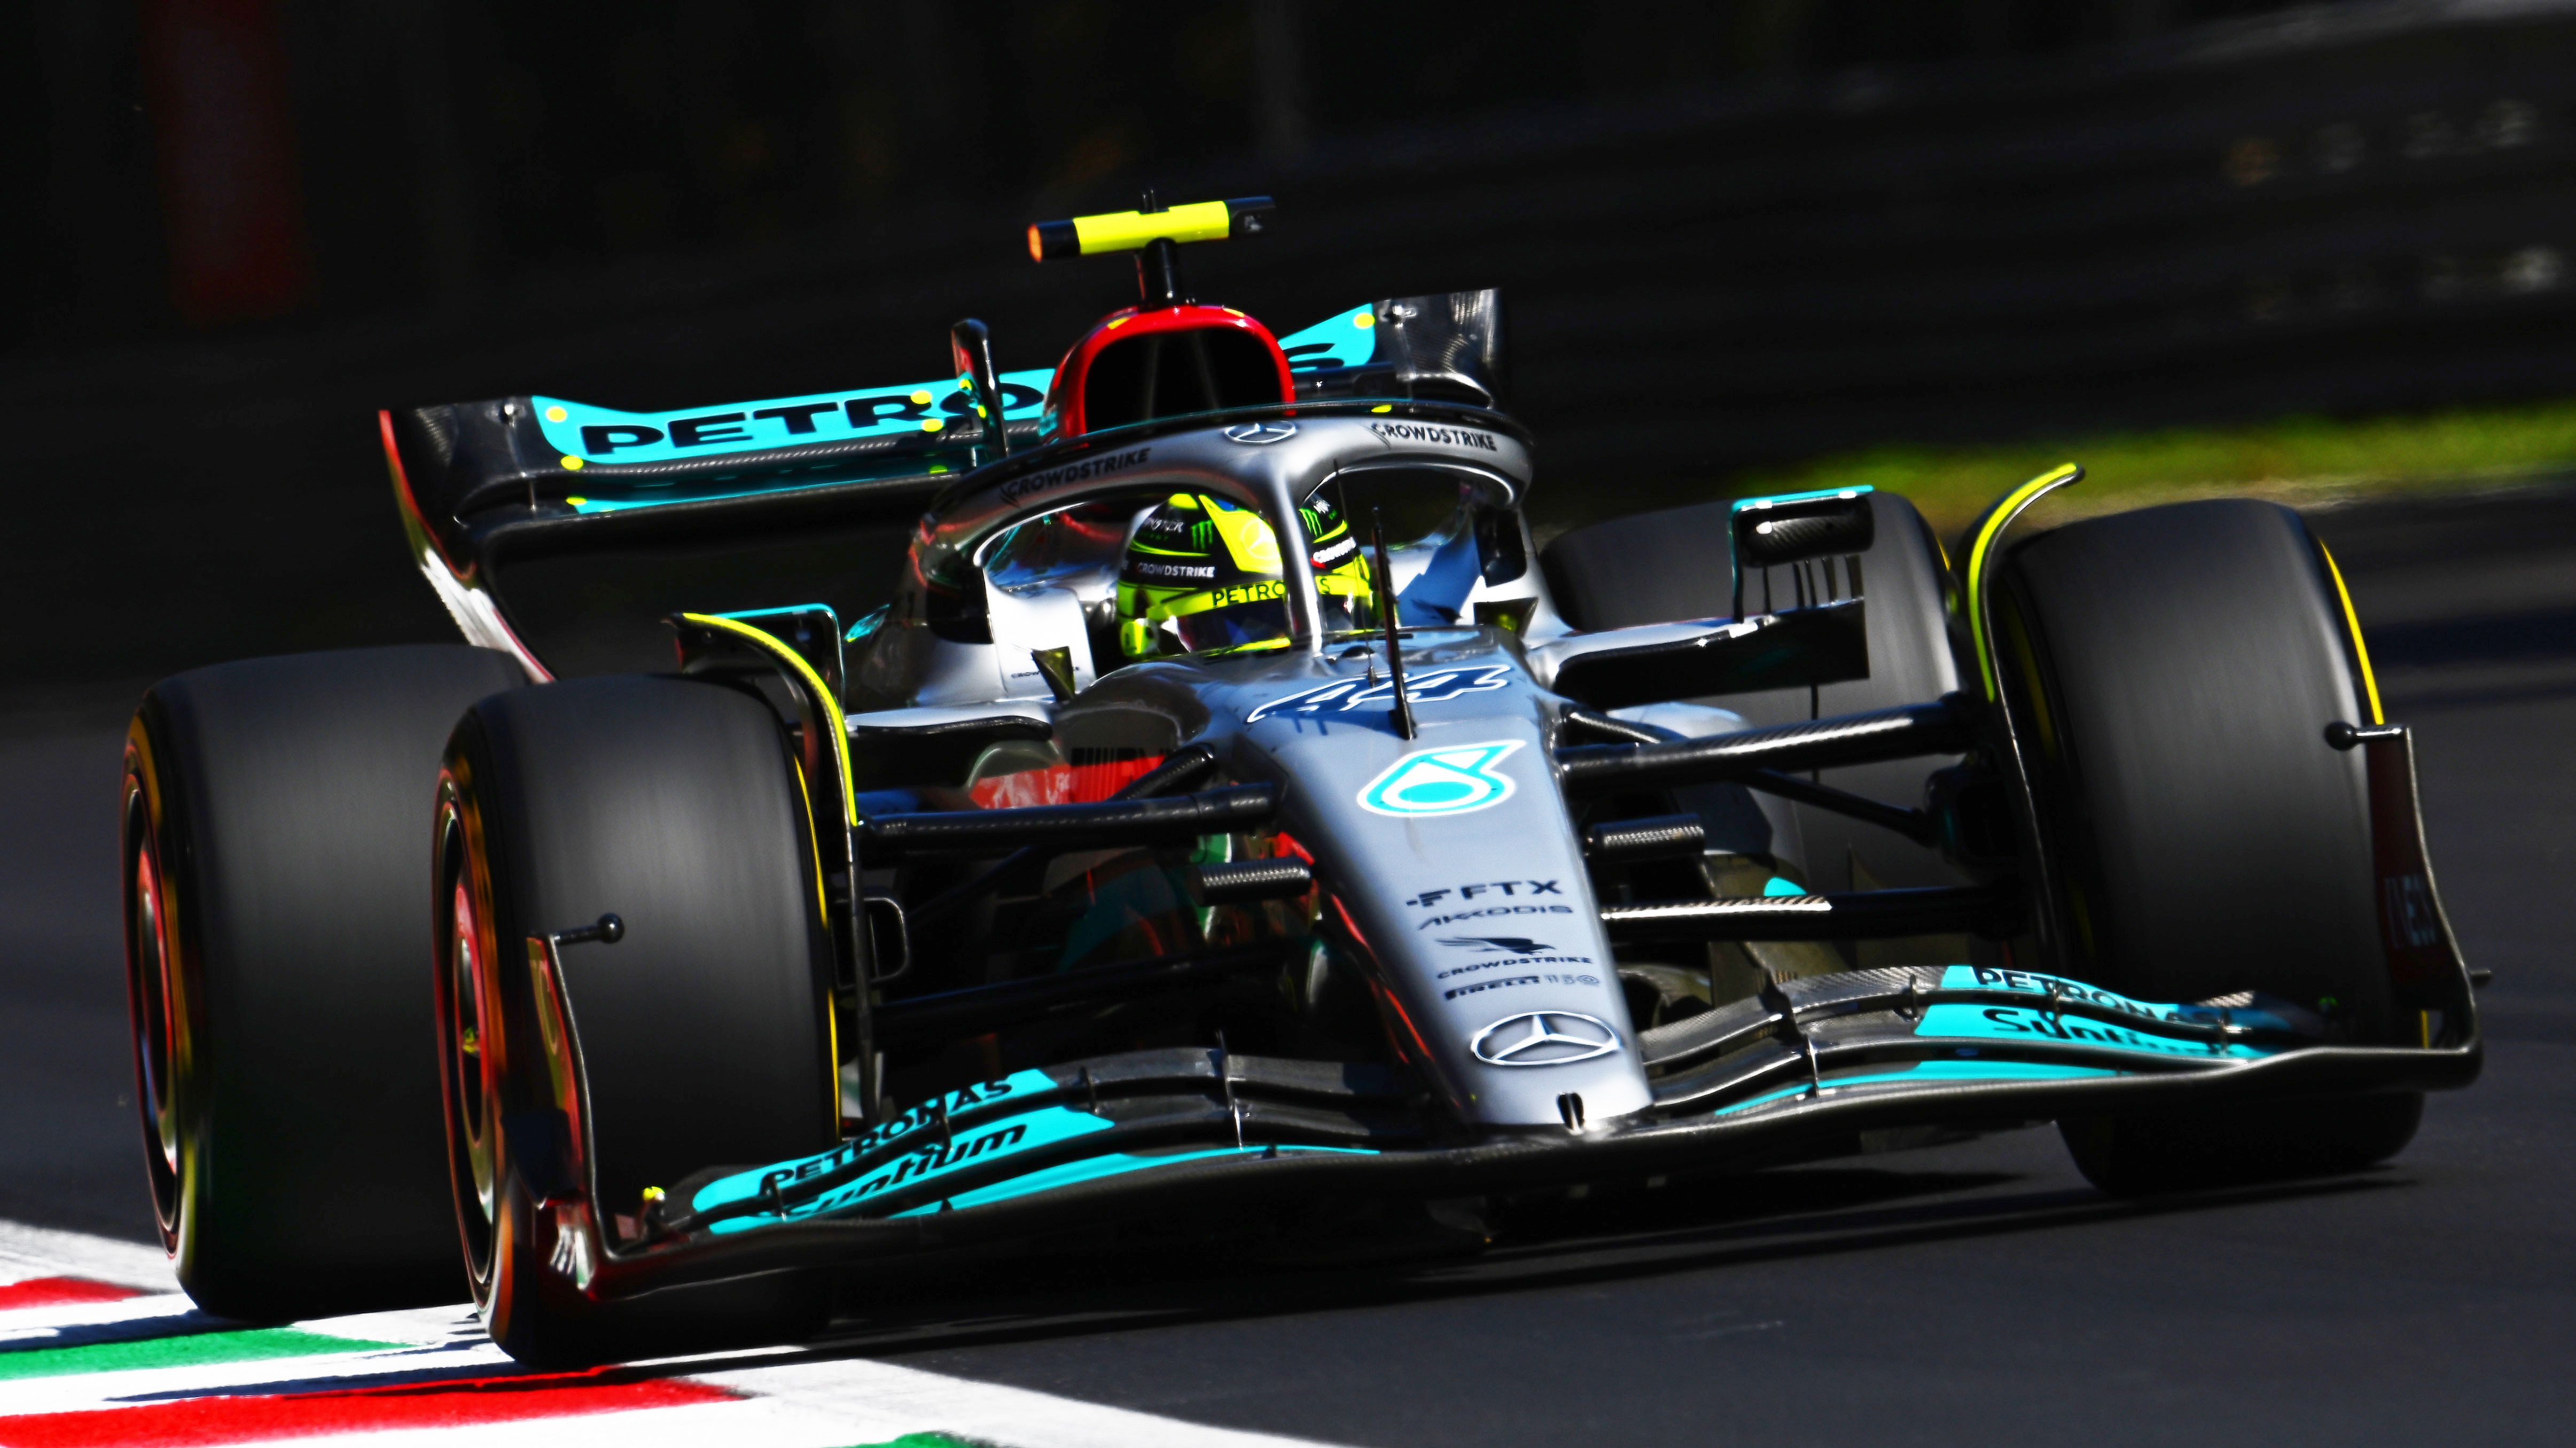 F1 Italian Grand prix reaction. Safety car finish triggers sour Lewis Hamilton memories